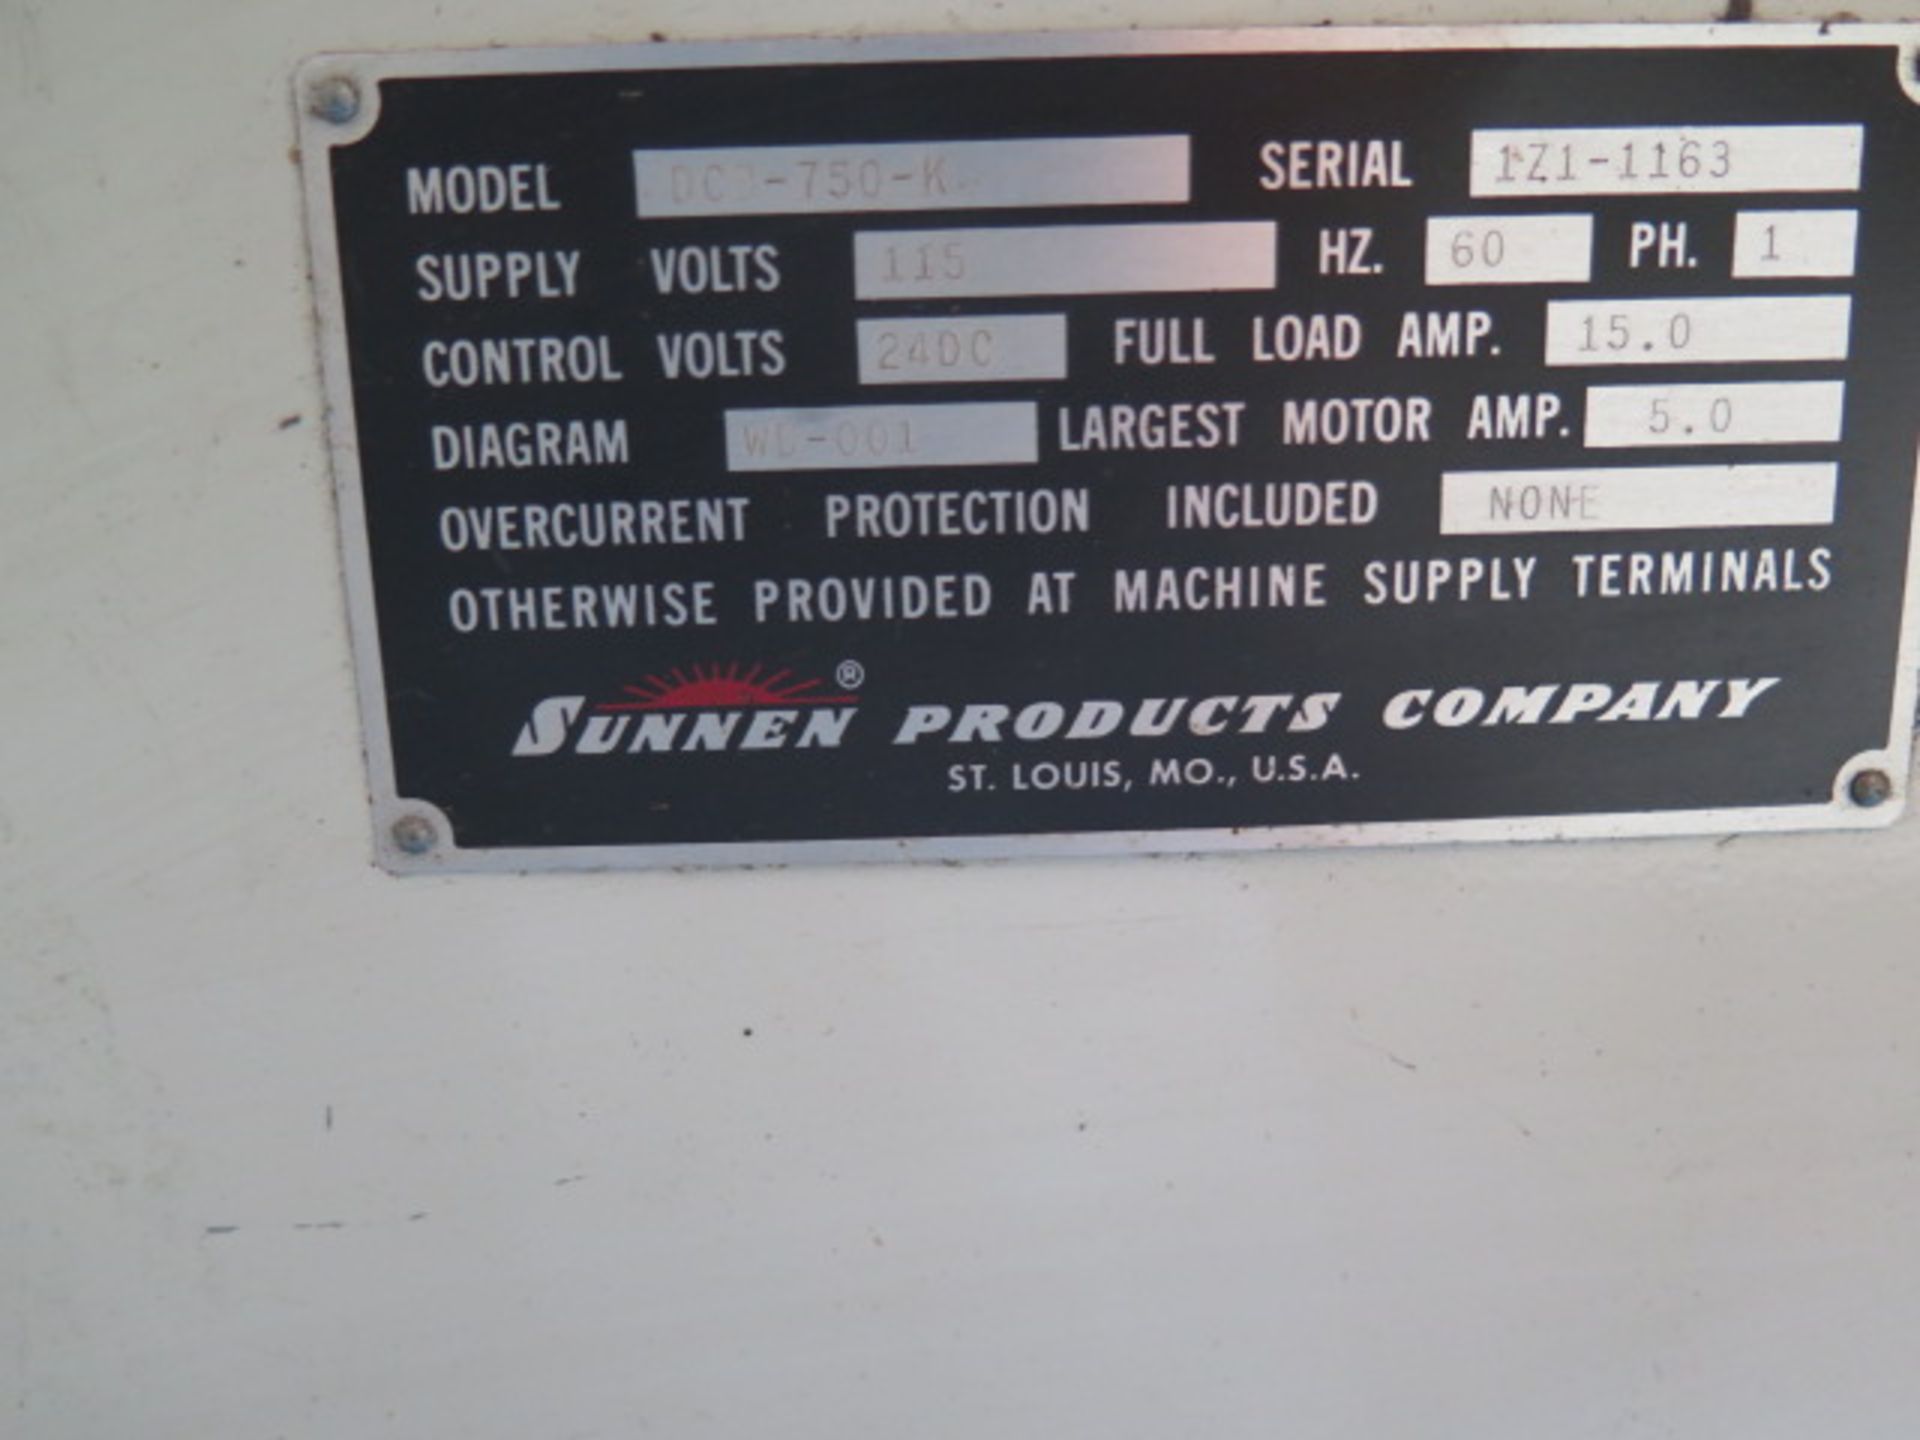 Sunnen DCB-750-K Dynamic Crankshaft Balancer s/n 1Z1-1163 w/ Sunnen Digital Controls, Milwaukee - Image 10 of 10